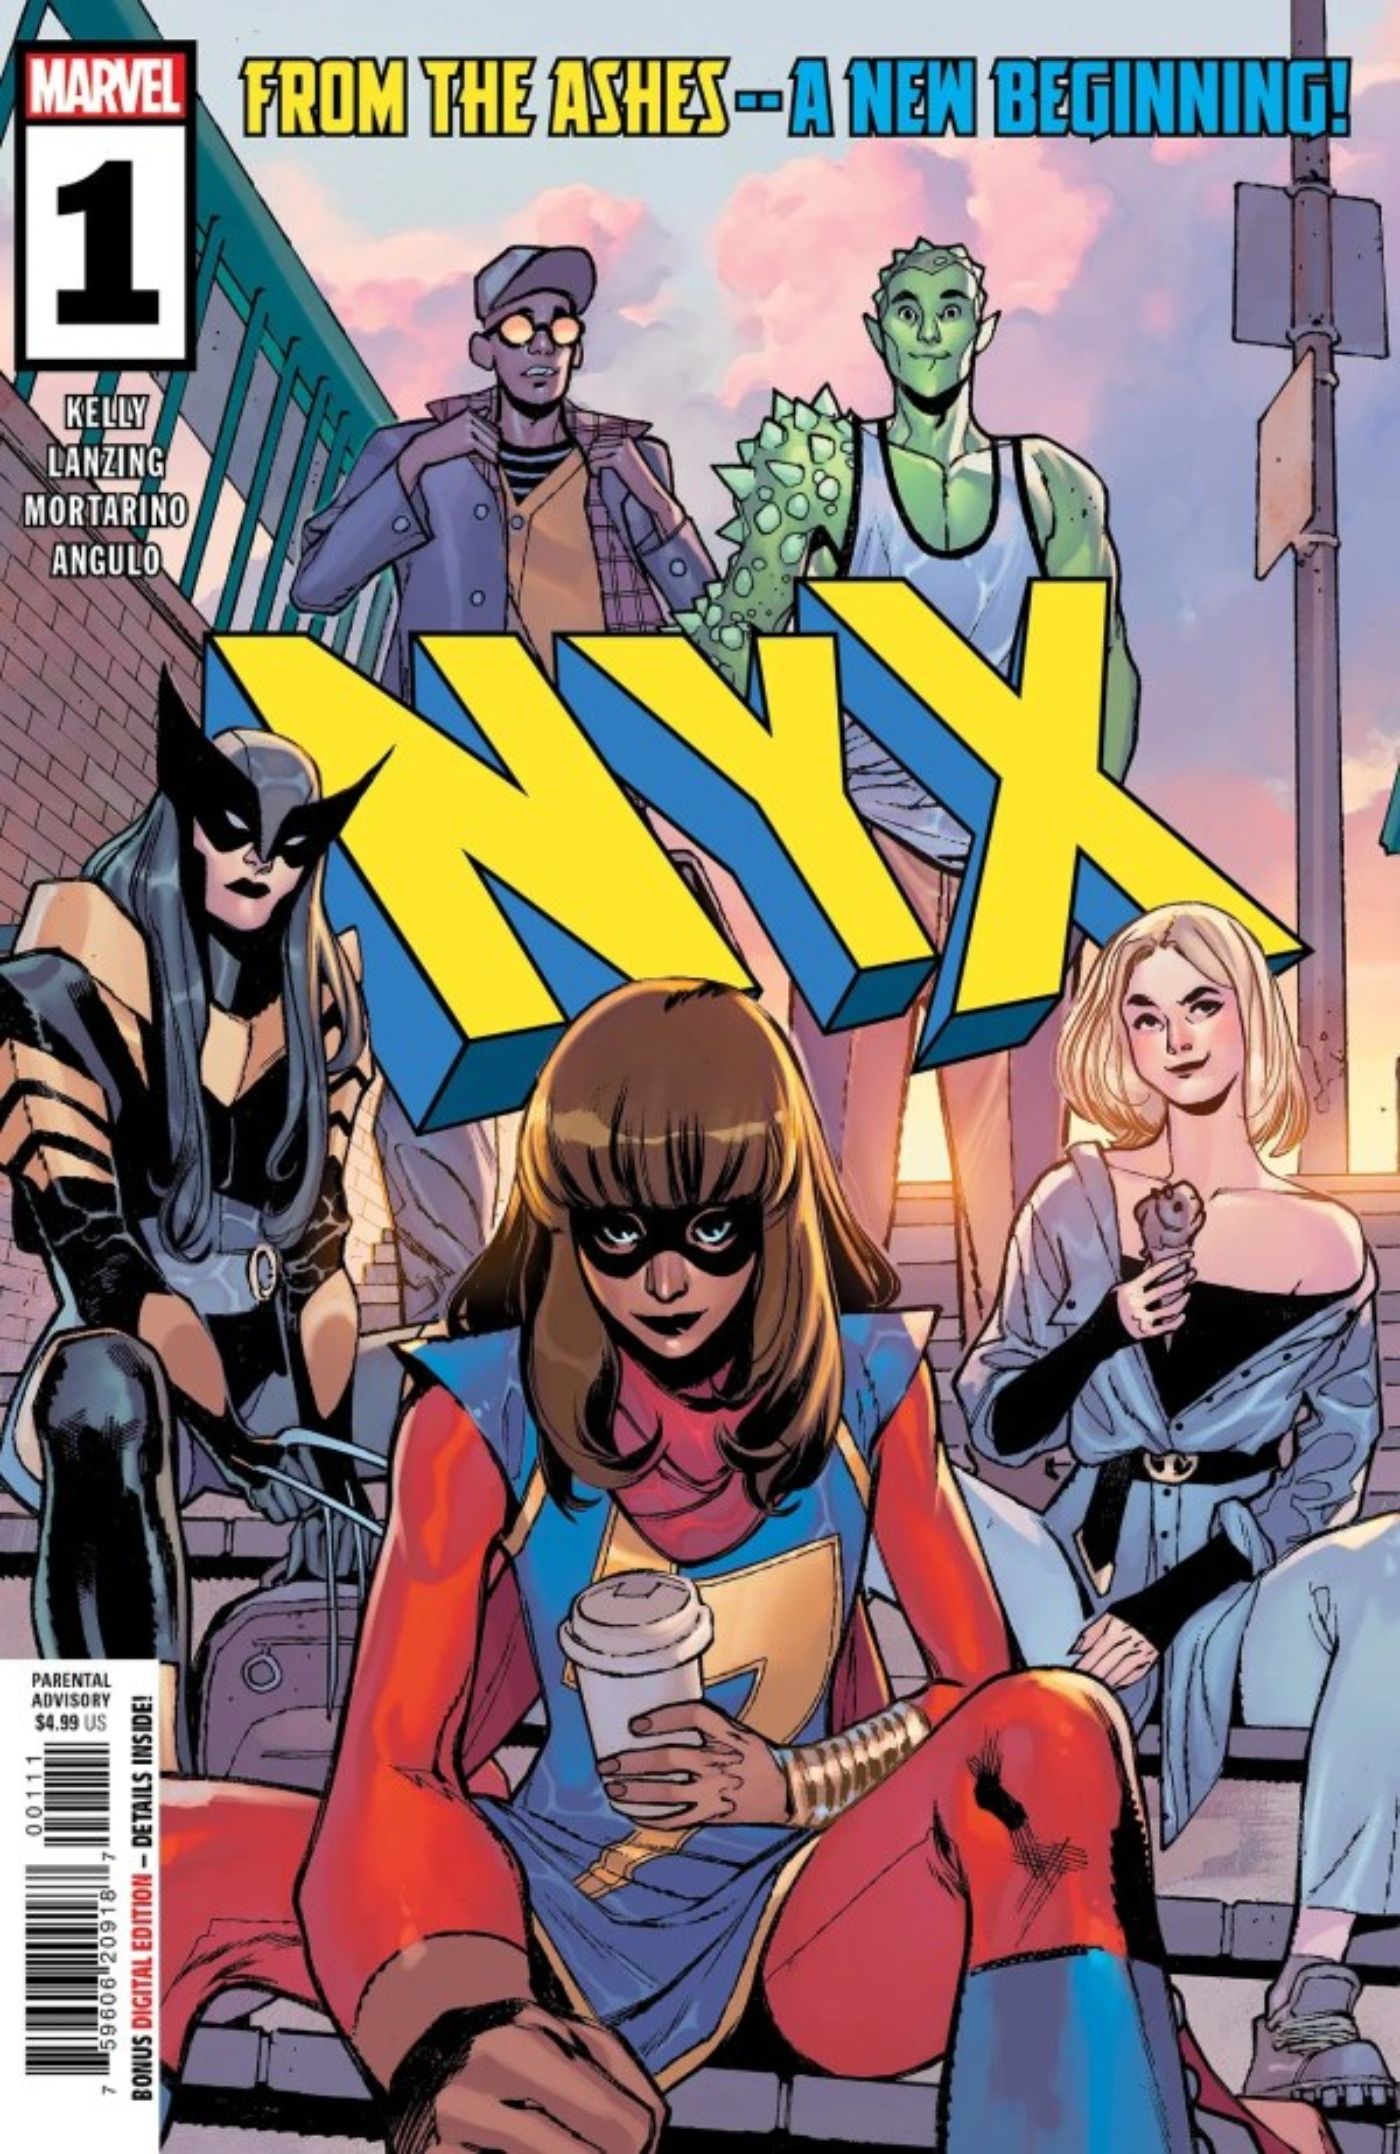 Capa #1 da NYX com Laura Kinney, Kamala Khan e outros.